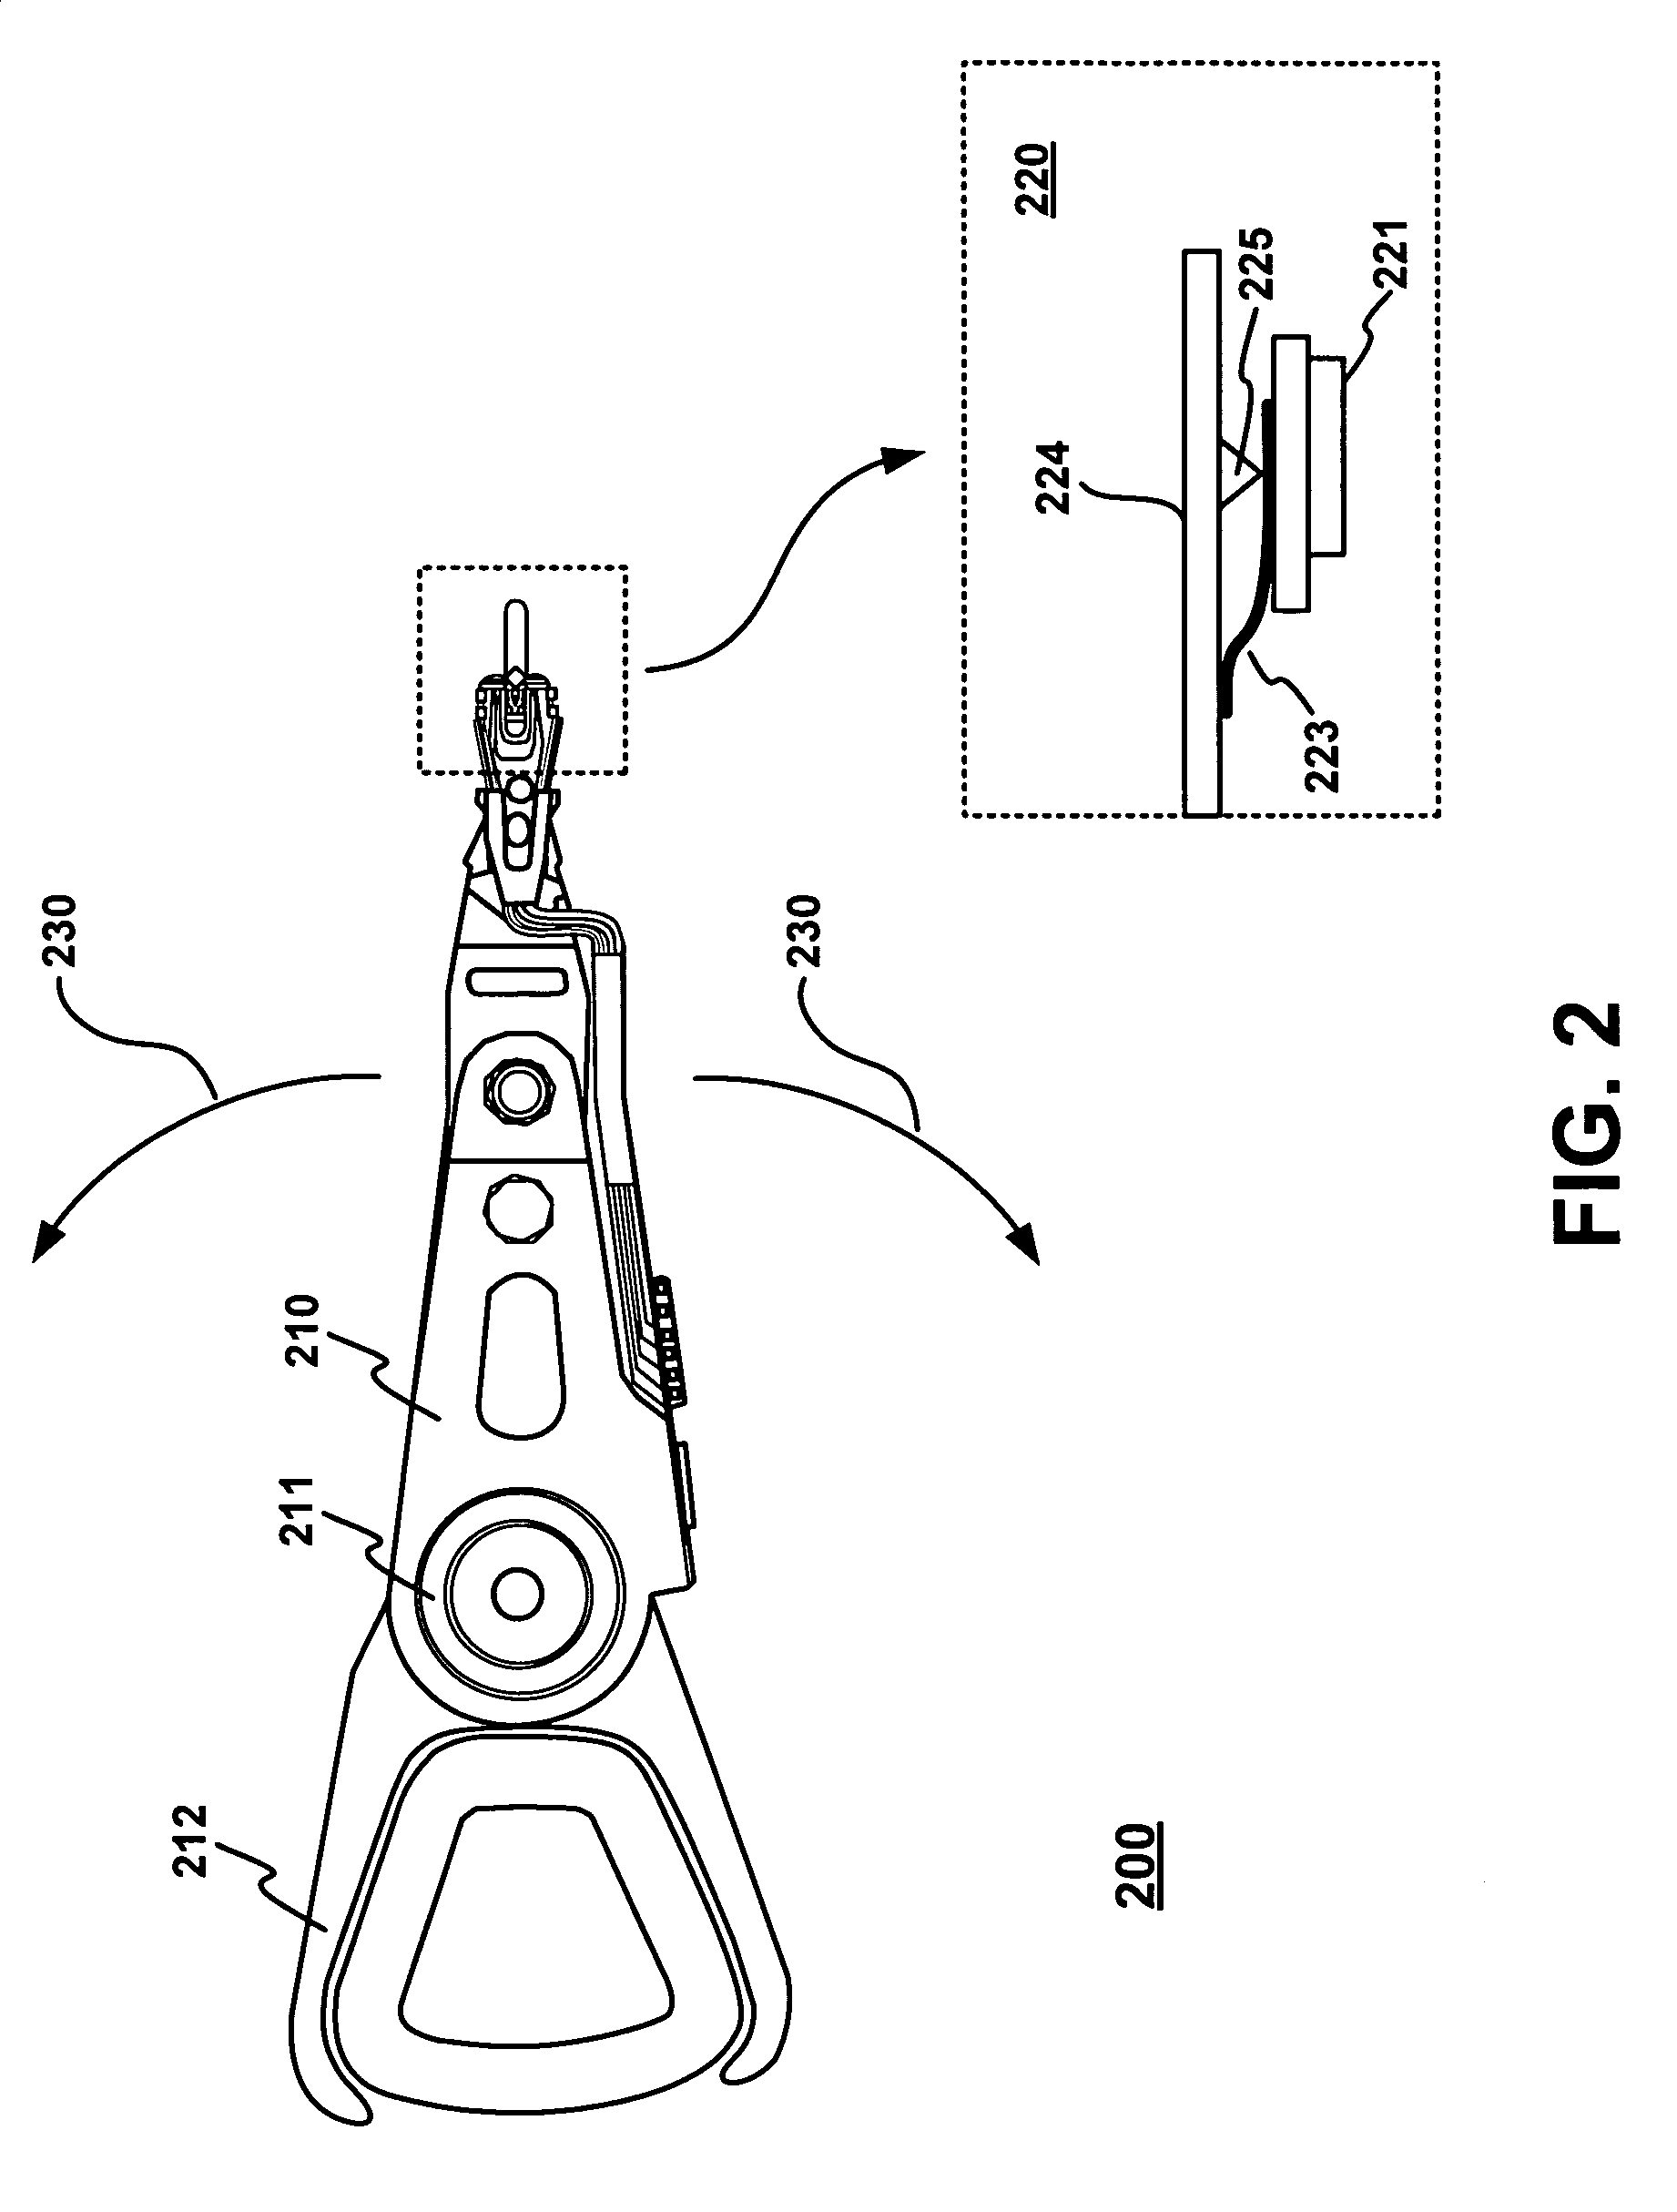 Integrated flexure tongue micro-actuator